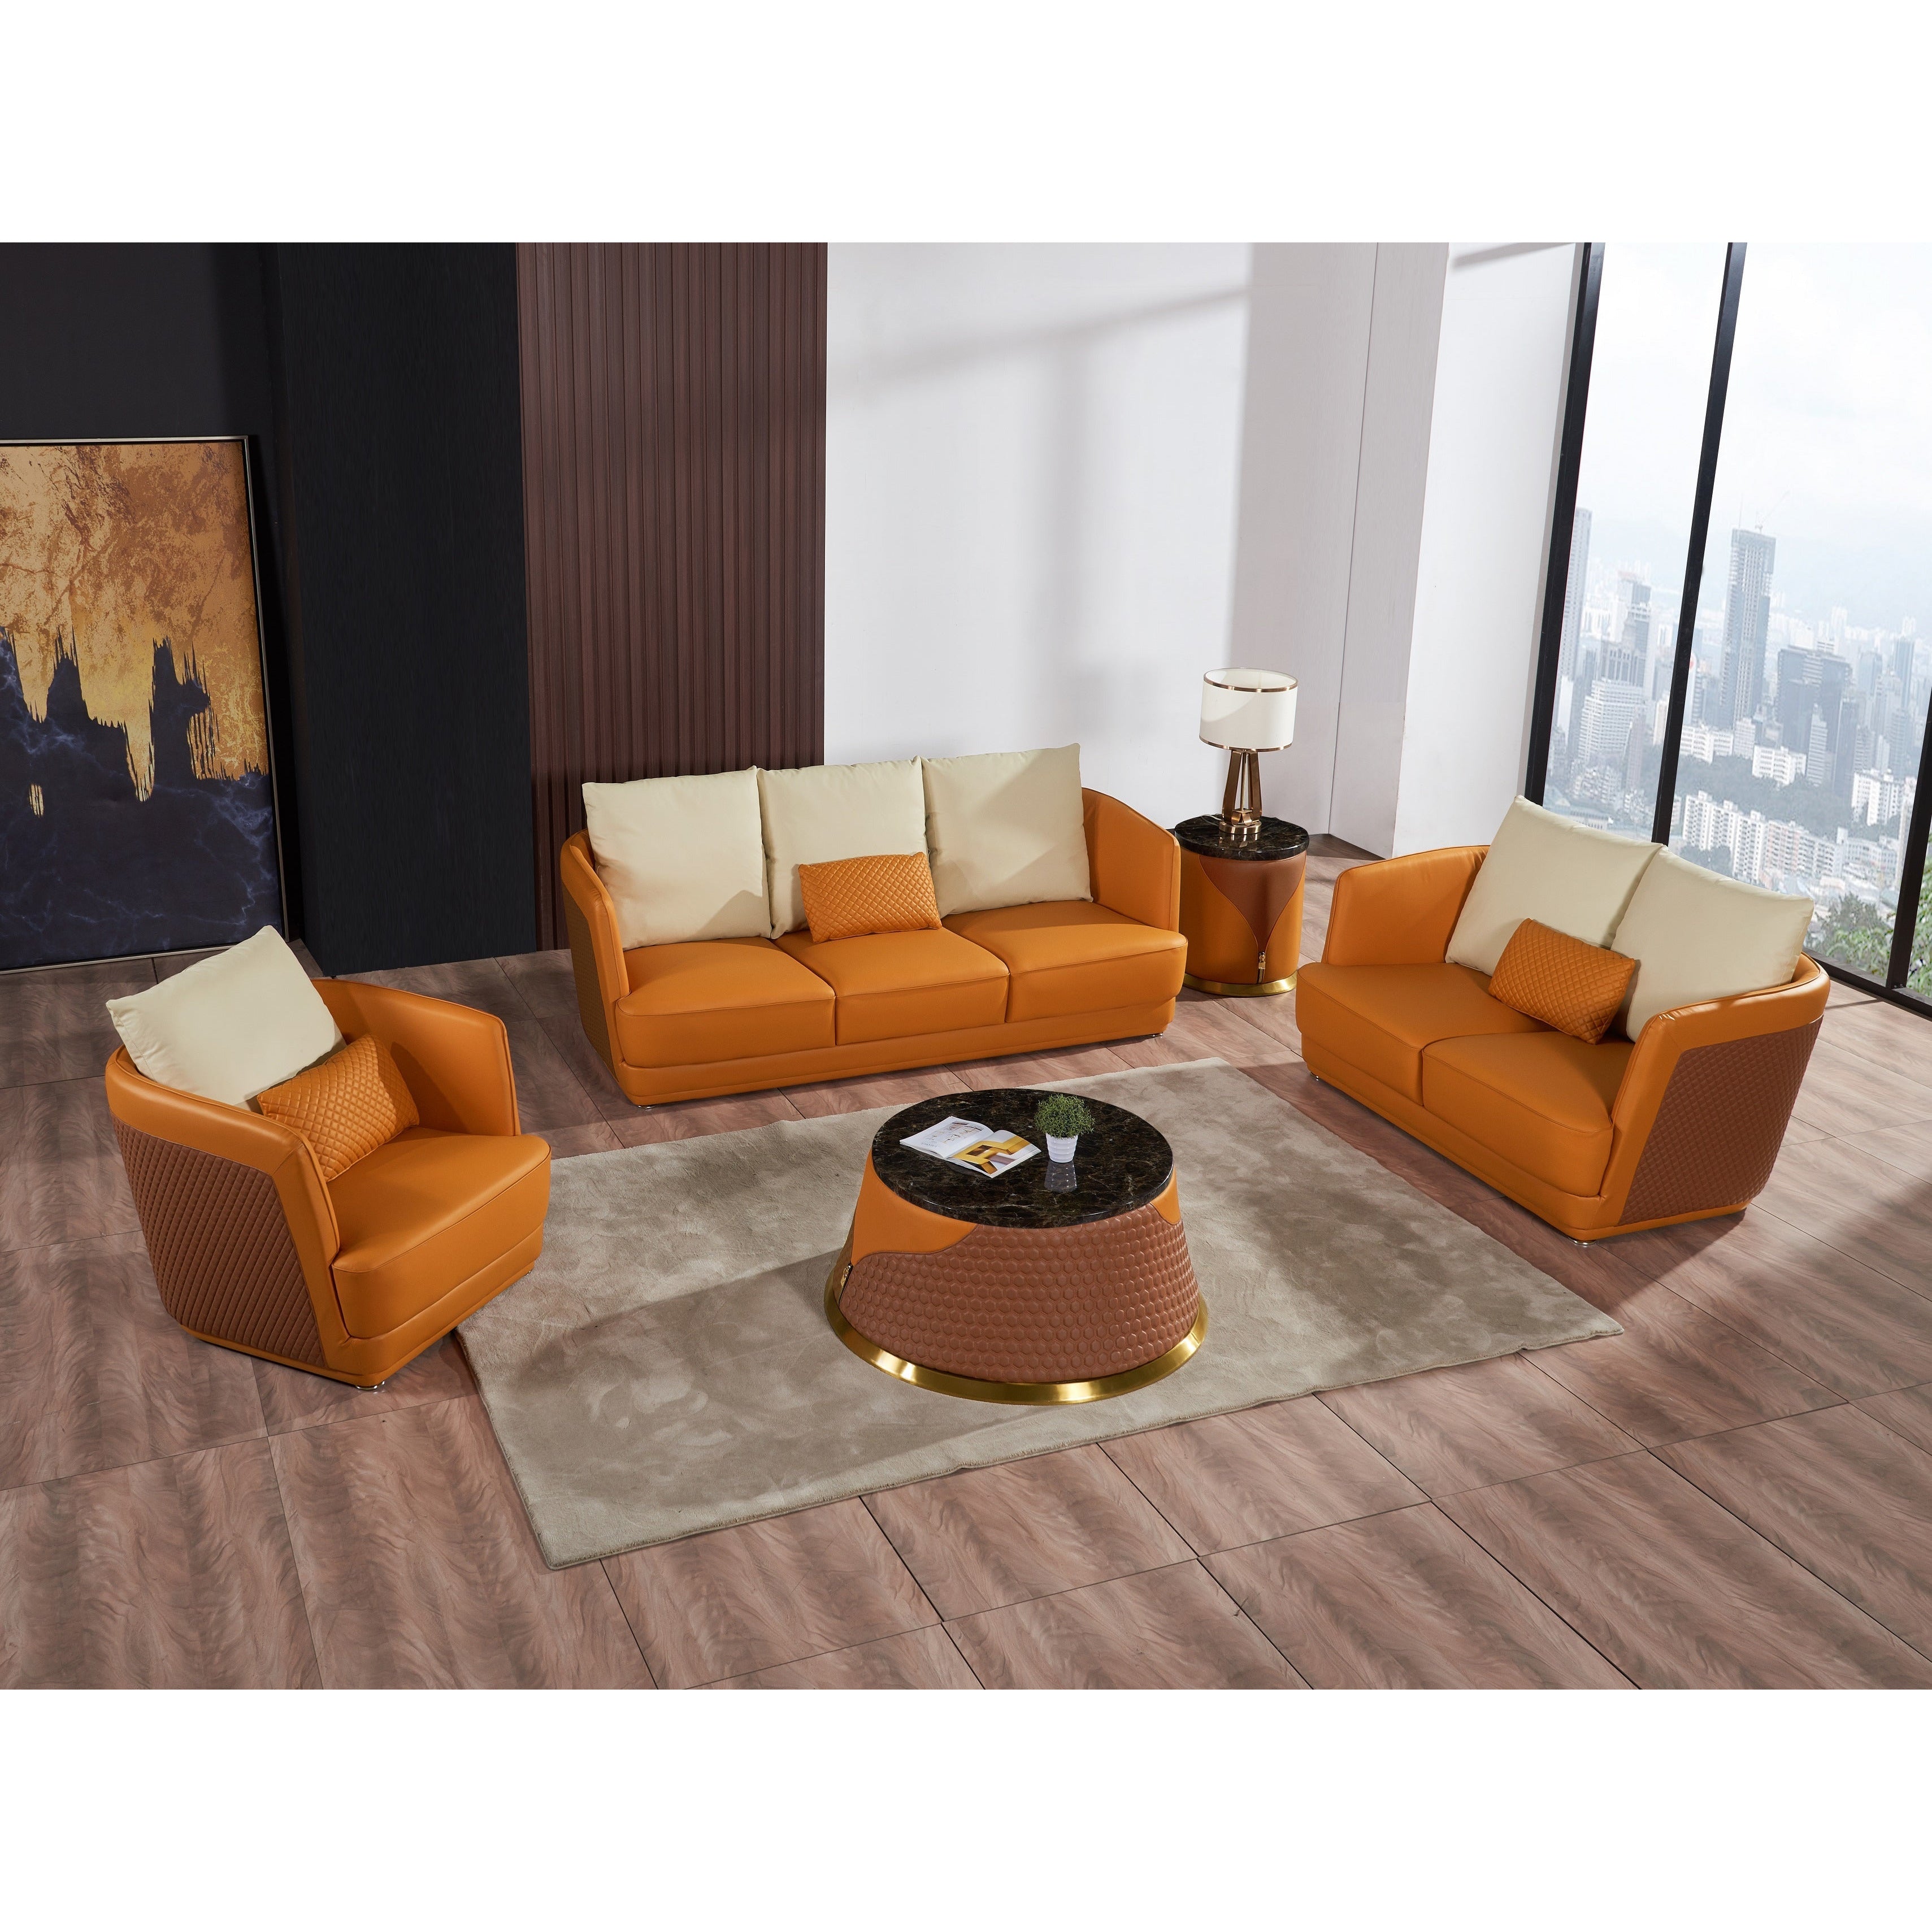 European Furniture - Glamour Mansion Sofa Orange & Brown Italian Leather - EF-51619-4S - New Star Living